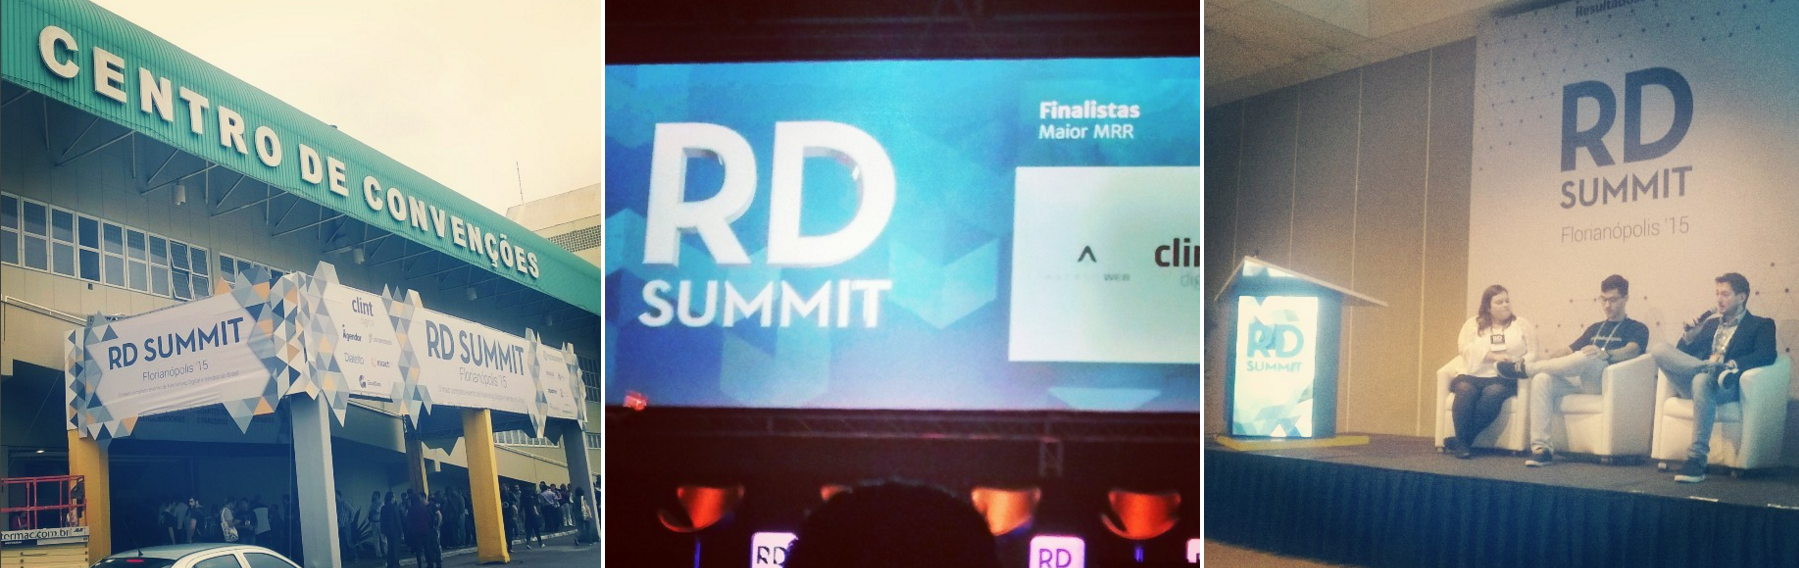 rd summit 2015 - astrusweb